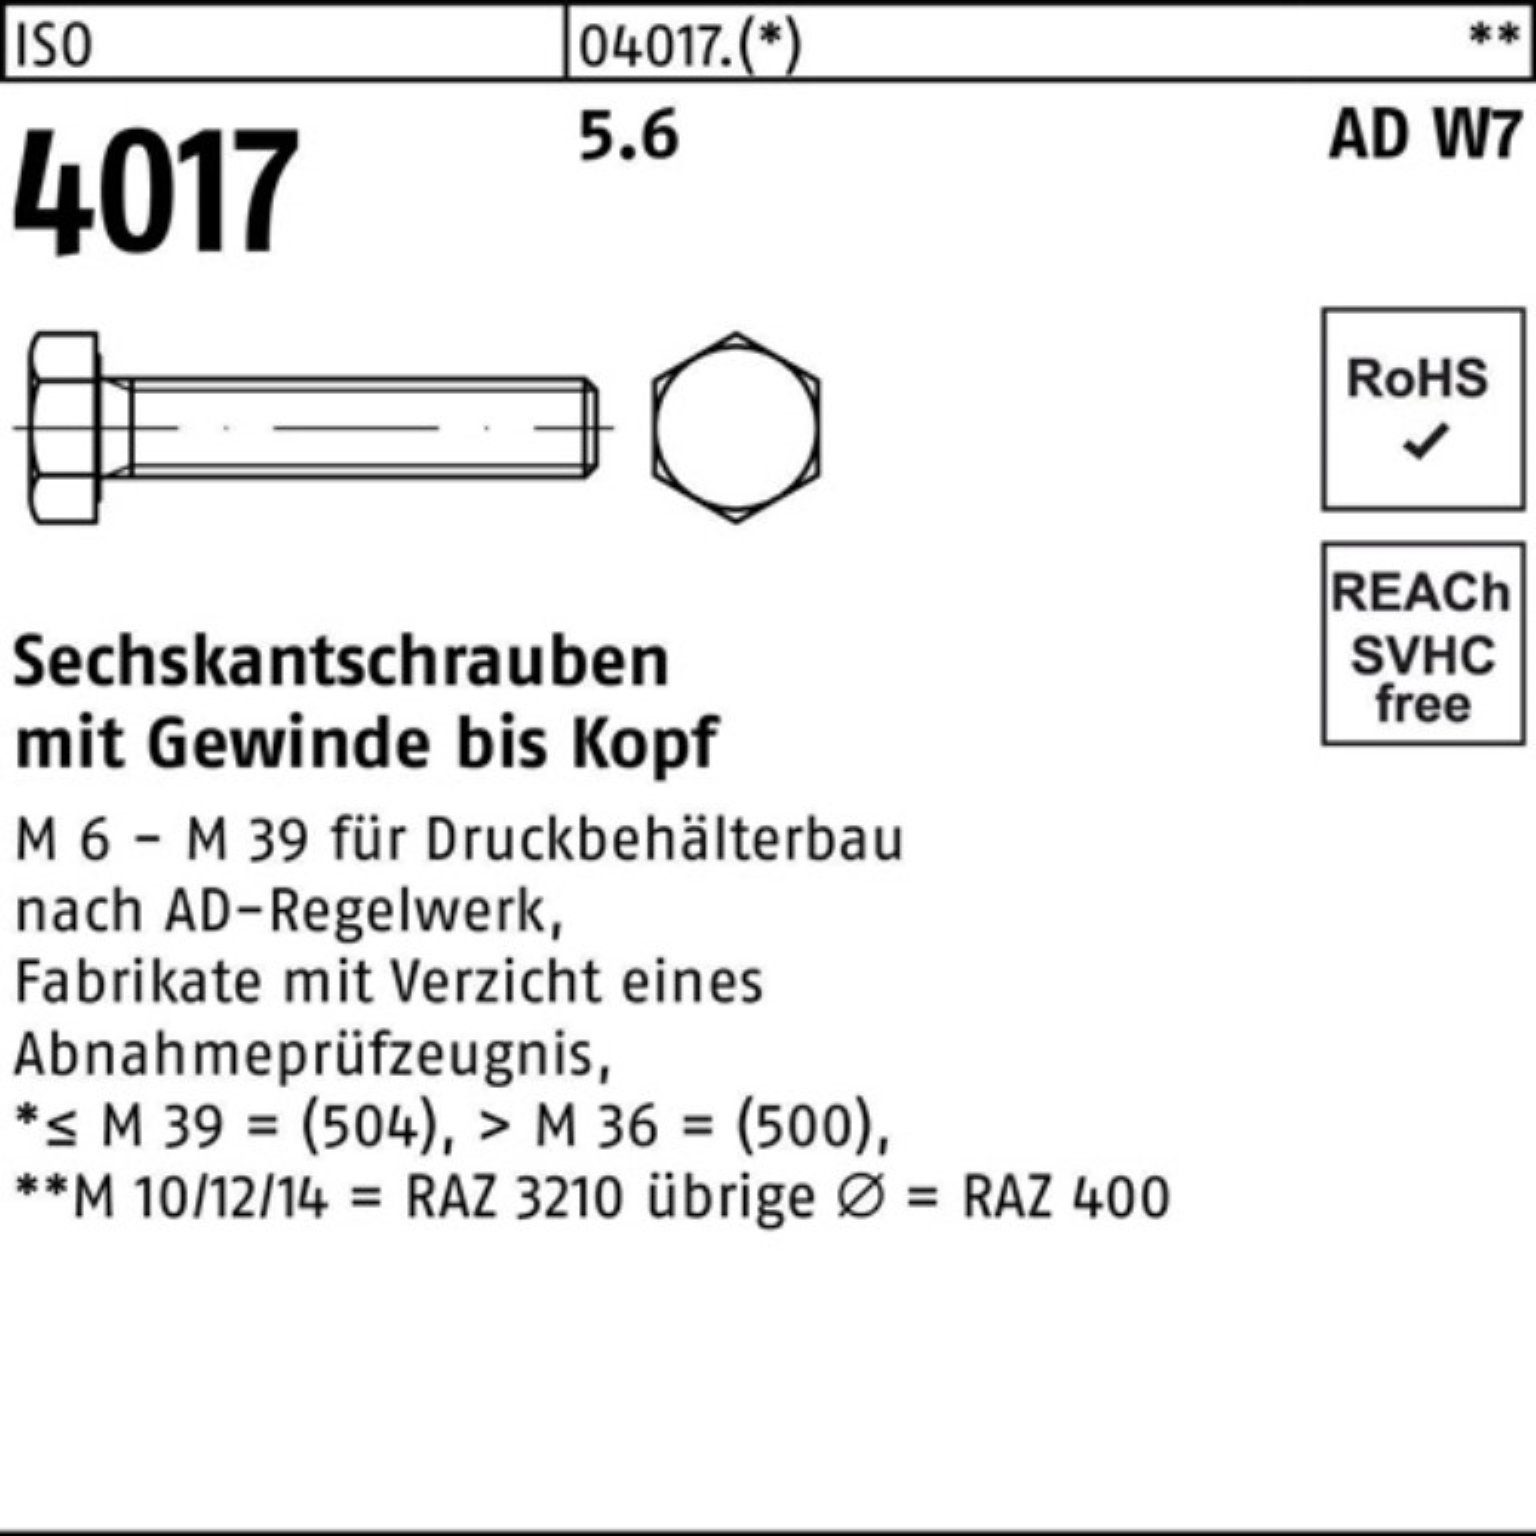 Bufab Sechskantschraube 100 M12x 100er ISO Sechskantschraube VG Pack 50 AD W7 4017 5.6 Stück